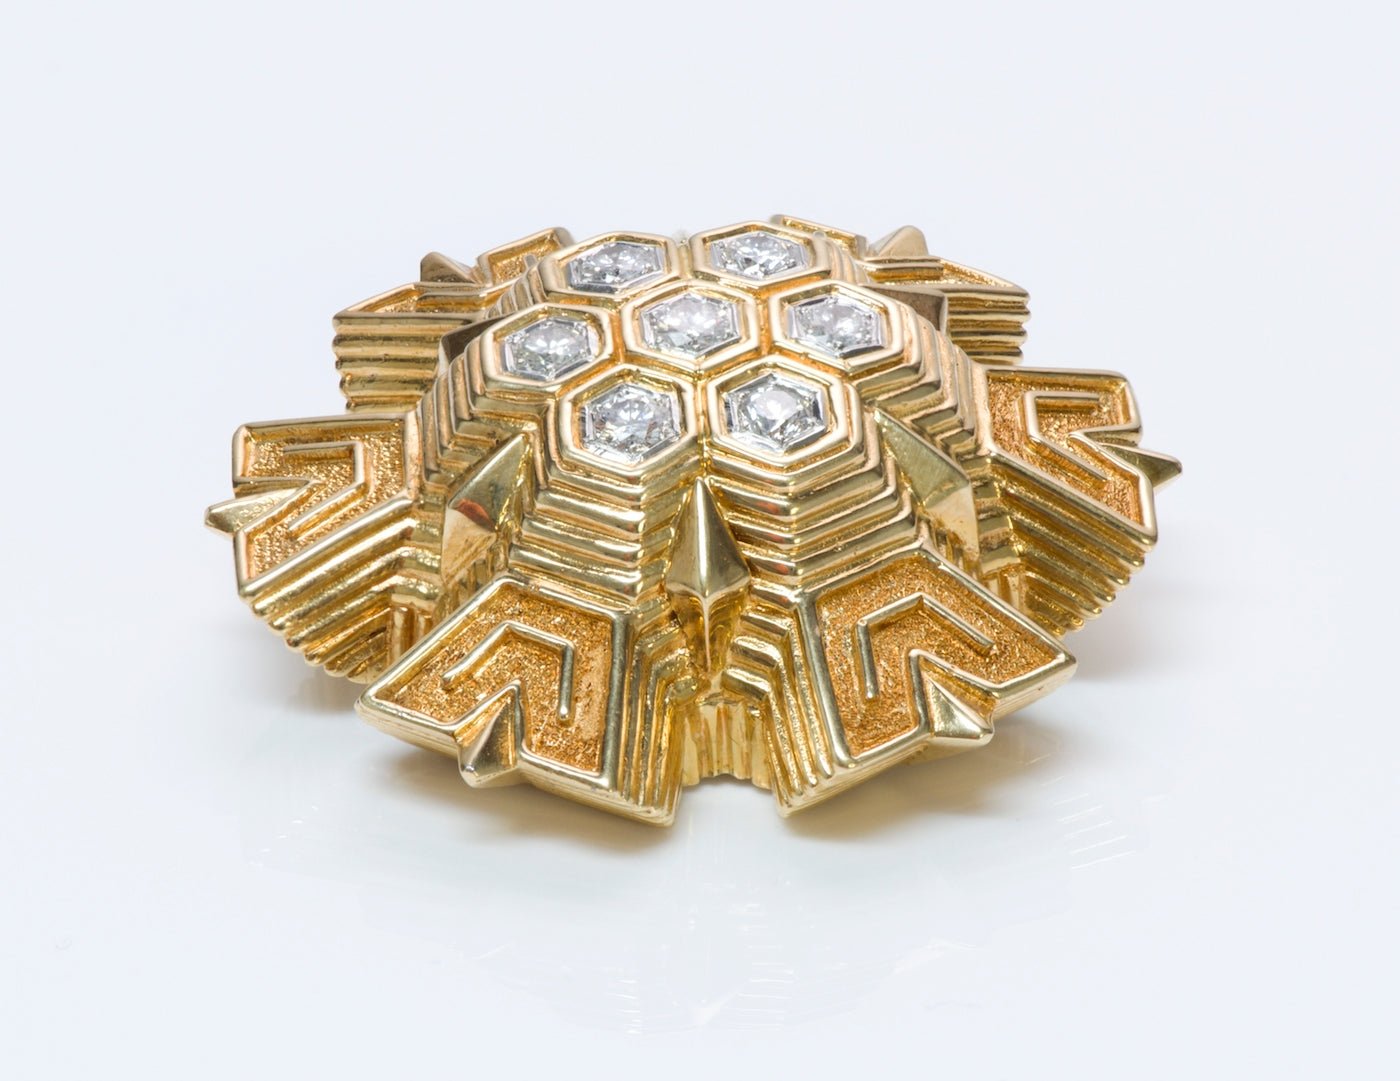 Tiffany & Co. Snowflake 18K Gold Diamond Brooch Pendant